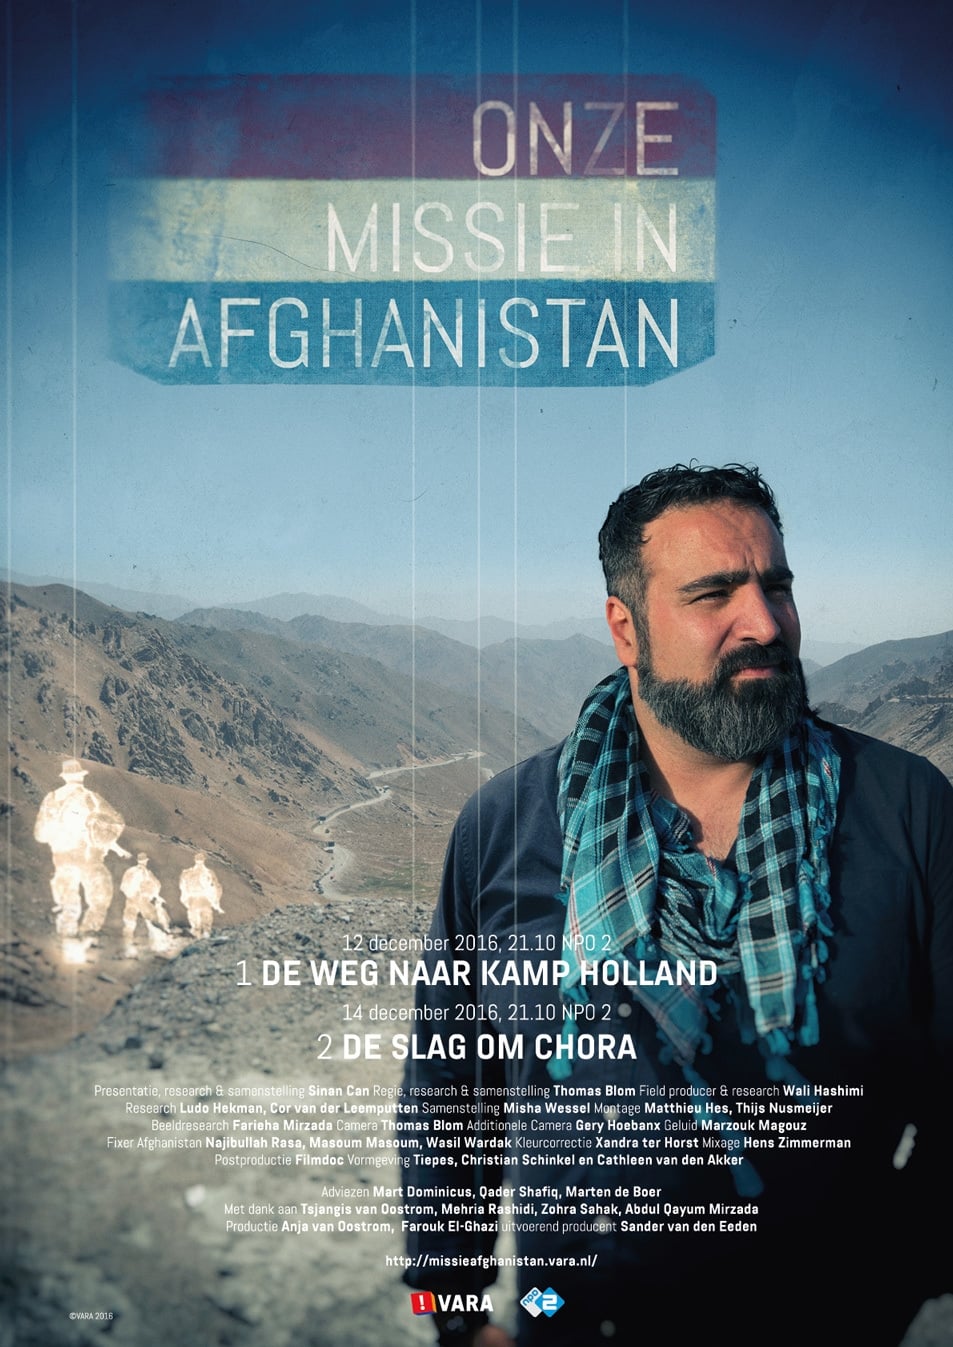 Onze missie in Afghanistan